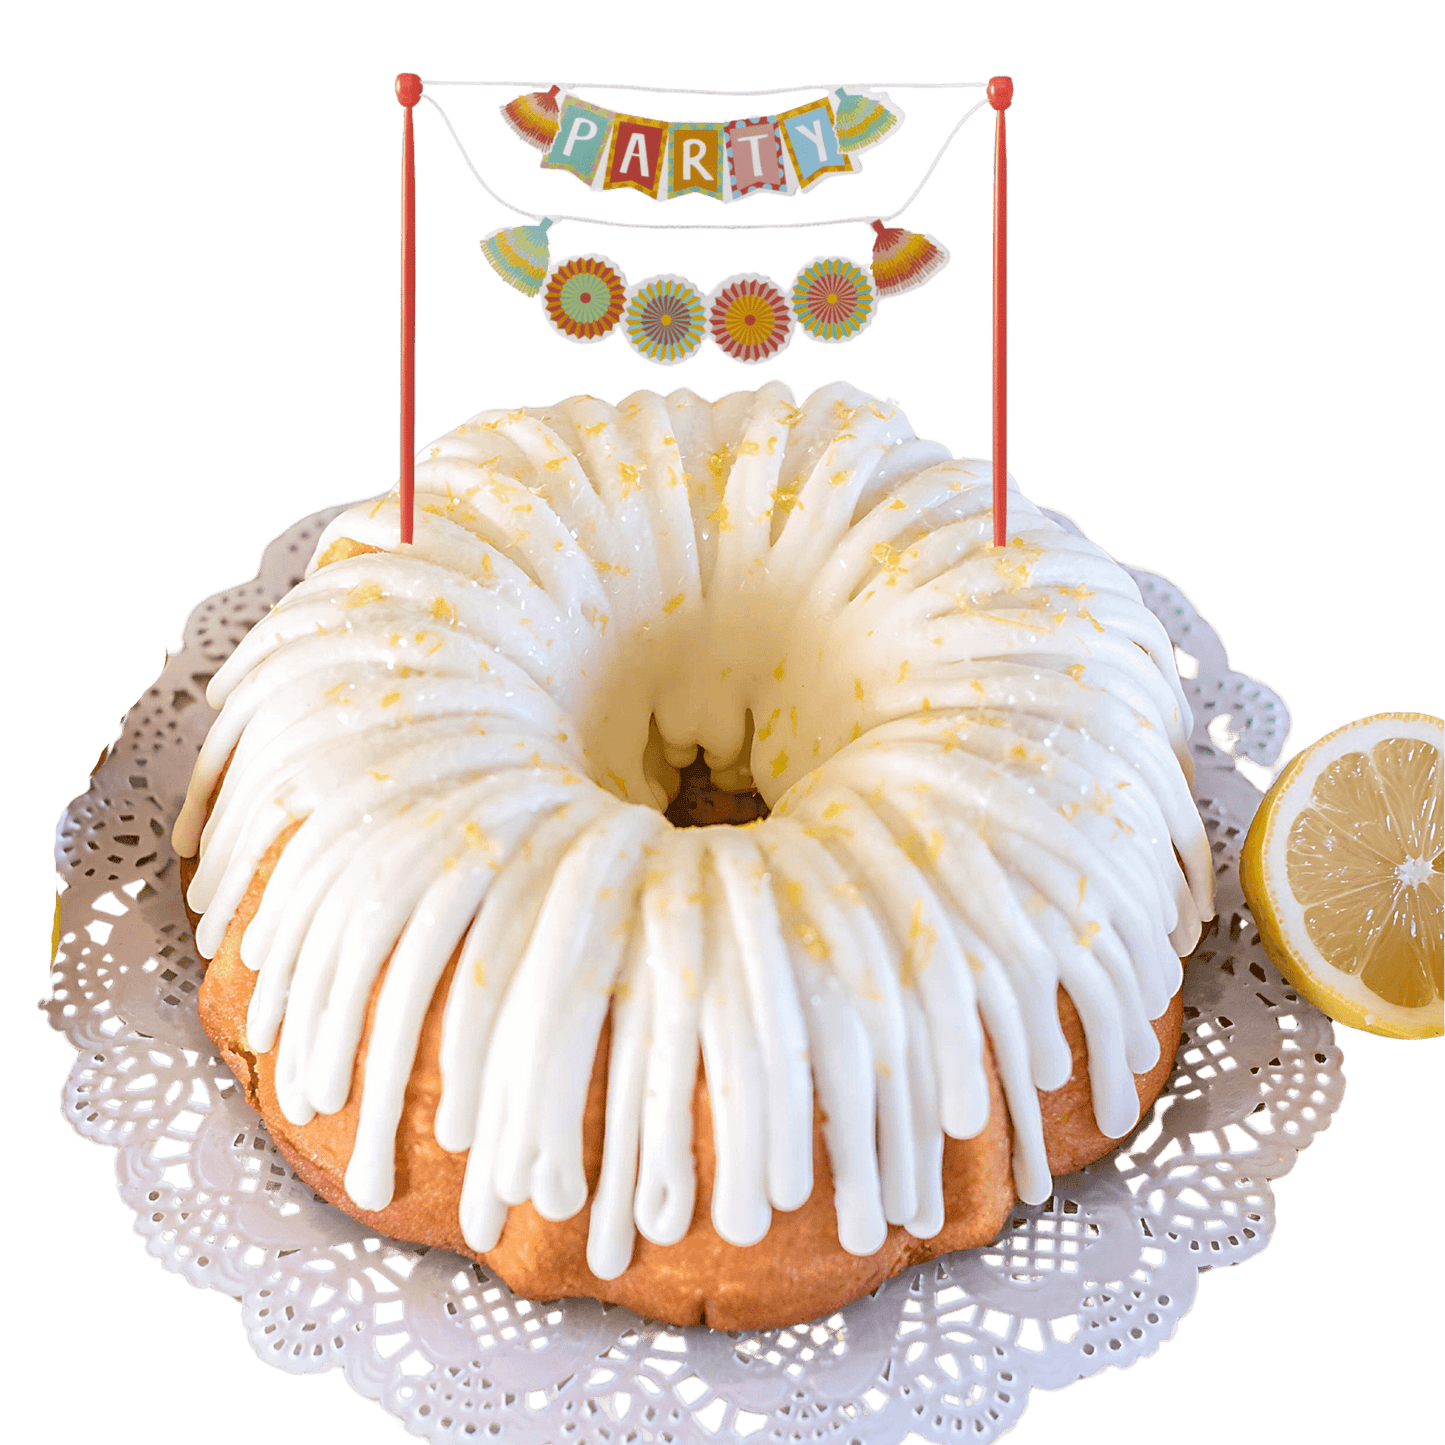 Lemon Squeeze "PARTY" Fiesta Cake Banner Bundt Cake